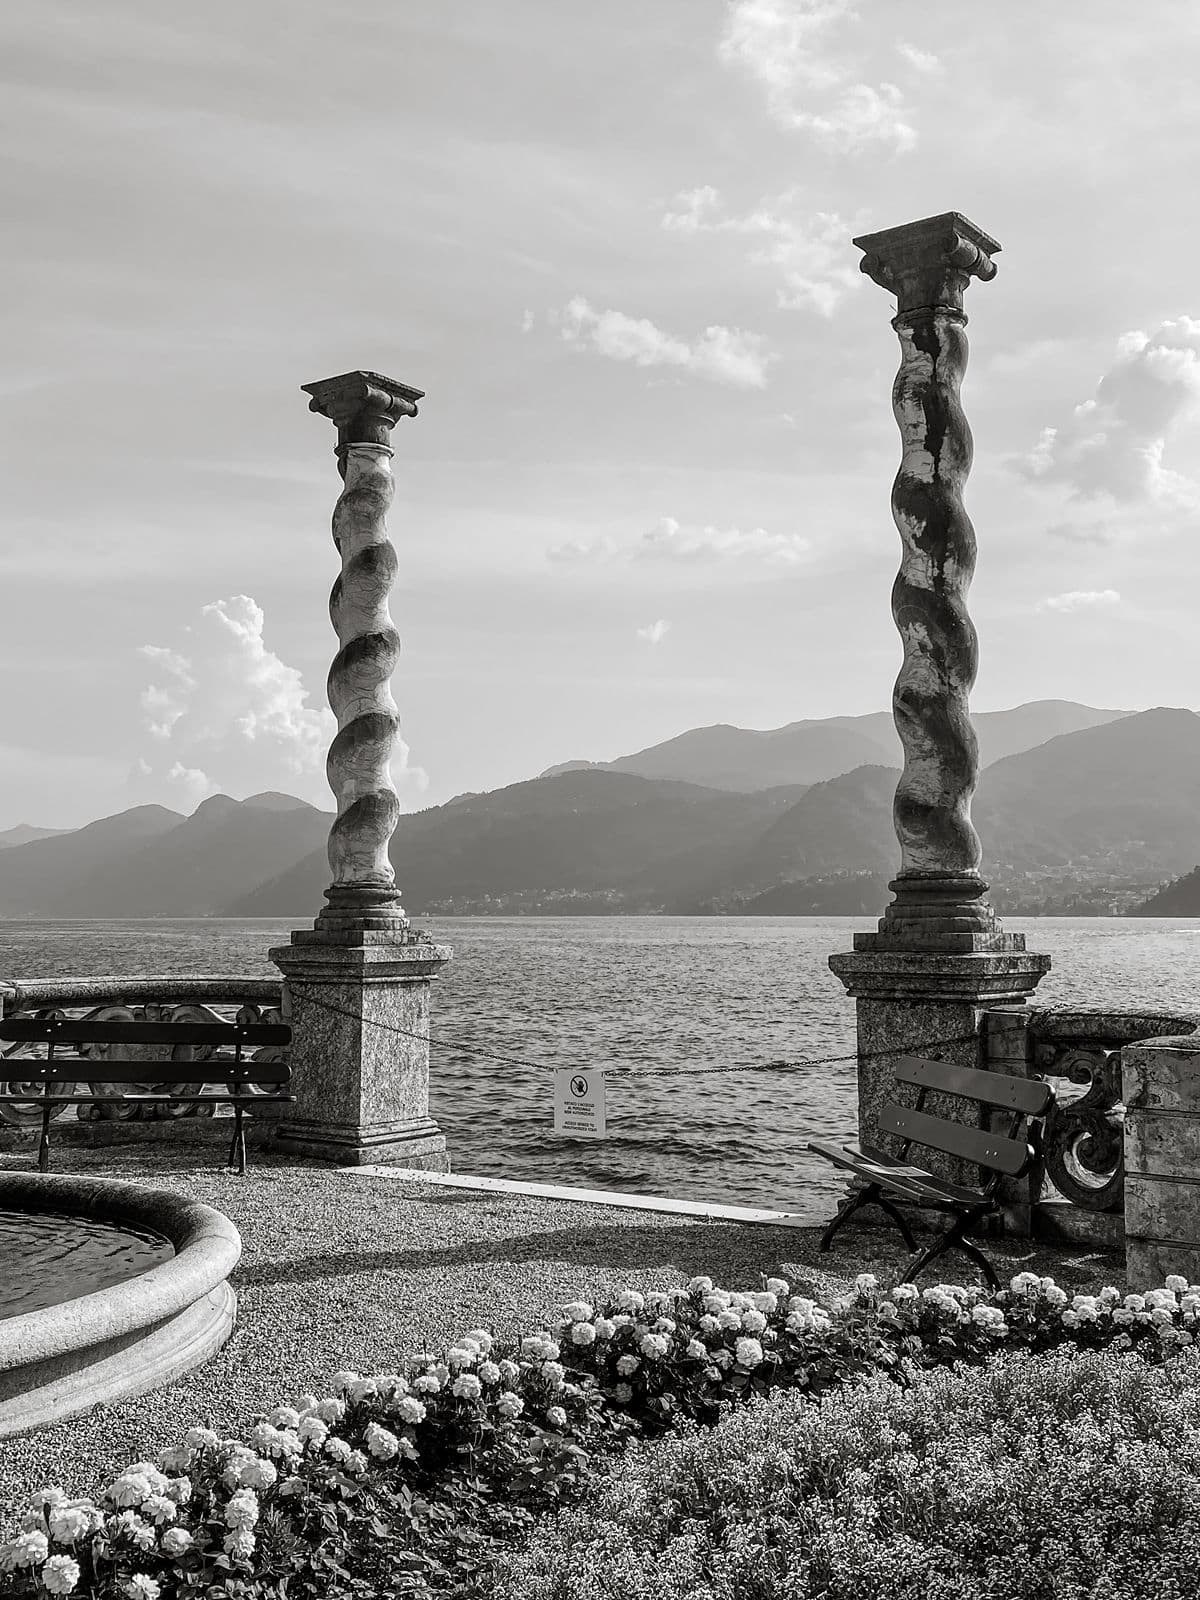 Villa Monastero pillars at water's edge in Lake Como